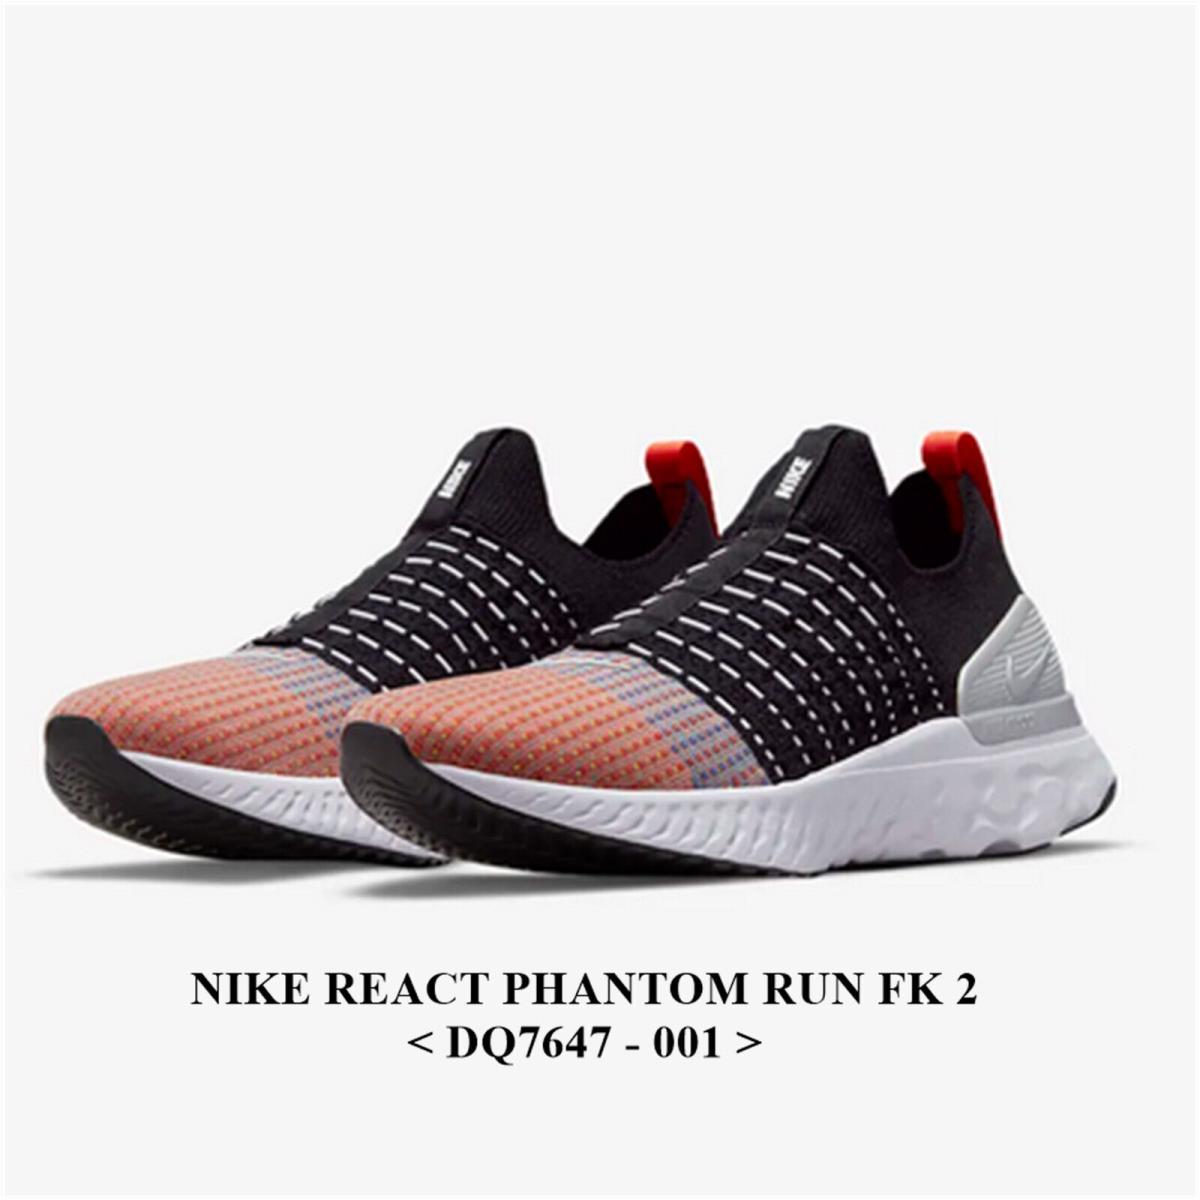 Nike React Phantom Run FK 2 DQ7647 - 001 Men`s Running Shoes.n NO Lid